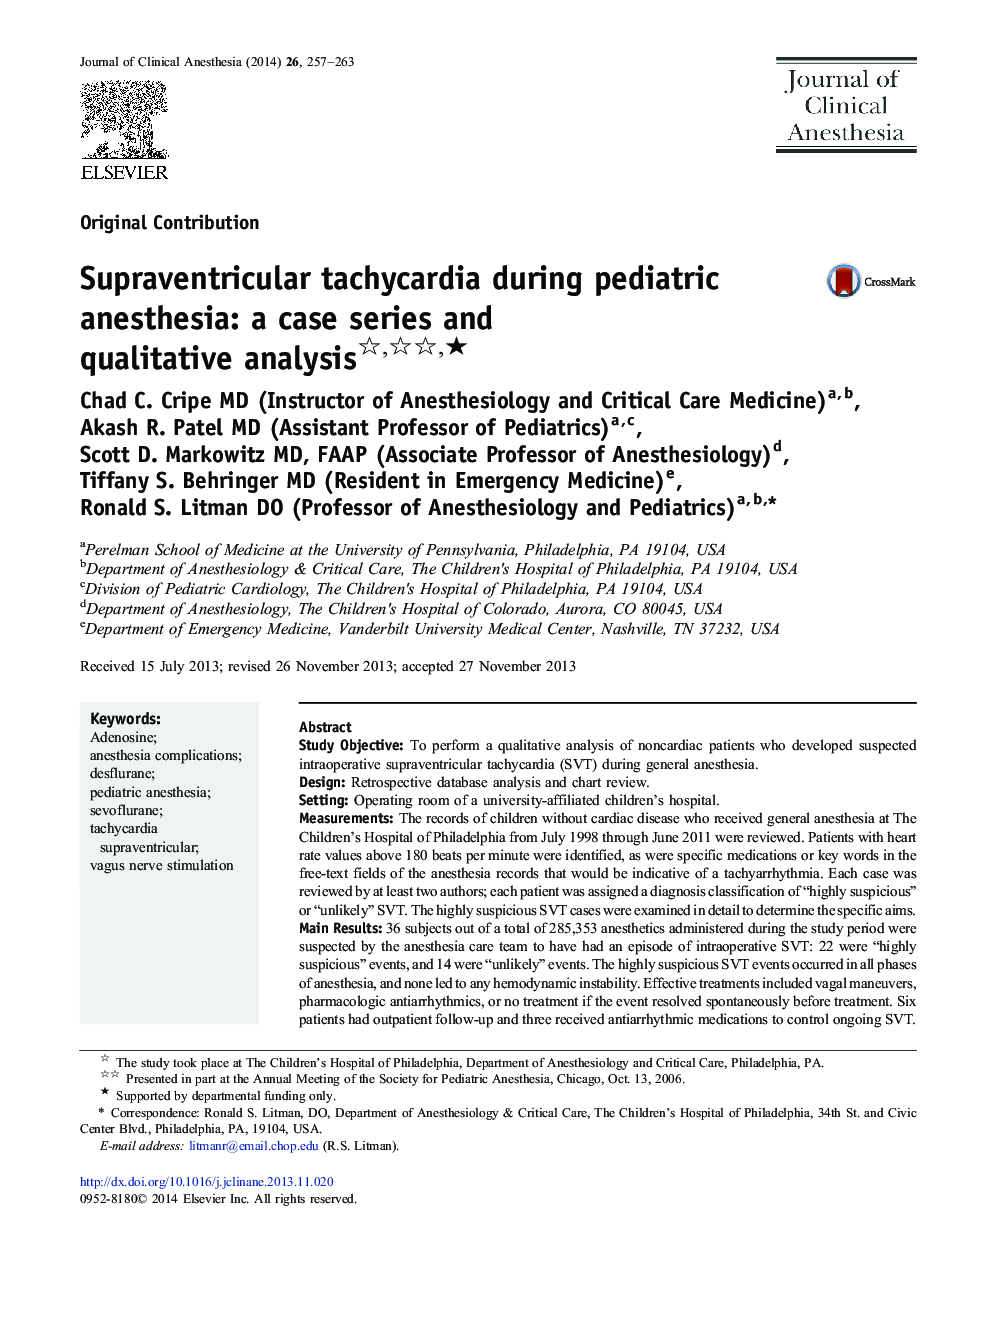 Supraventricular tachycardia during pediatric anesthesia: a case series and qualitative analysis ★